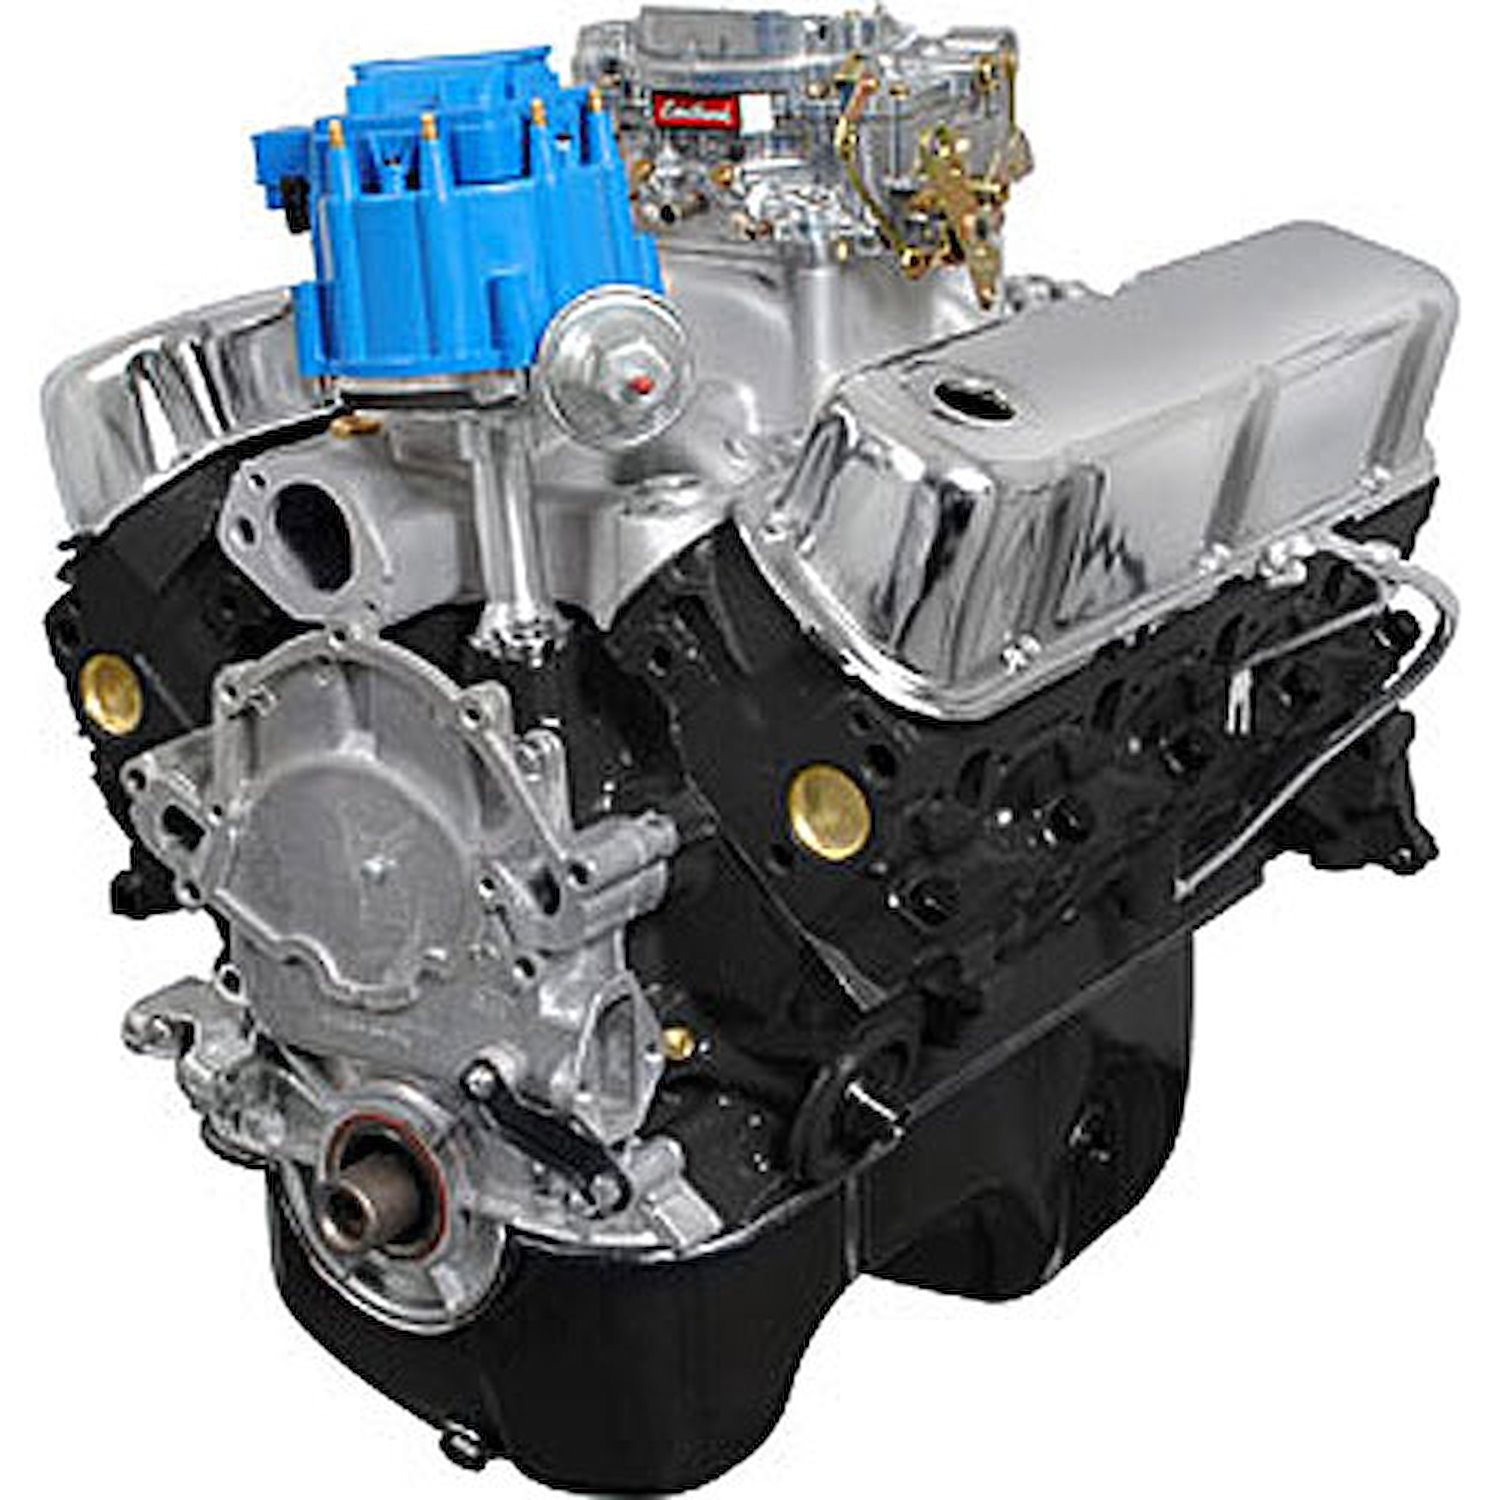 Blueprint ford engine reviews #3